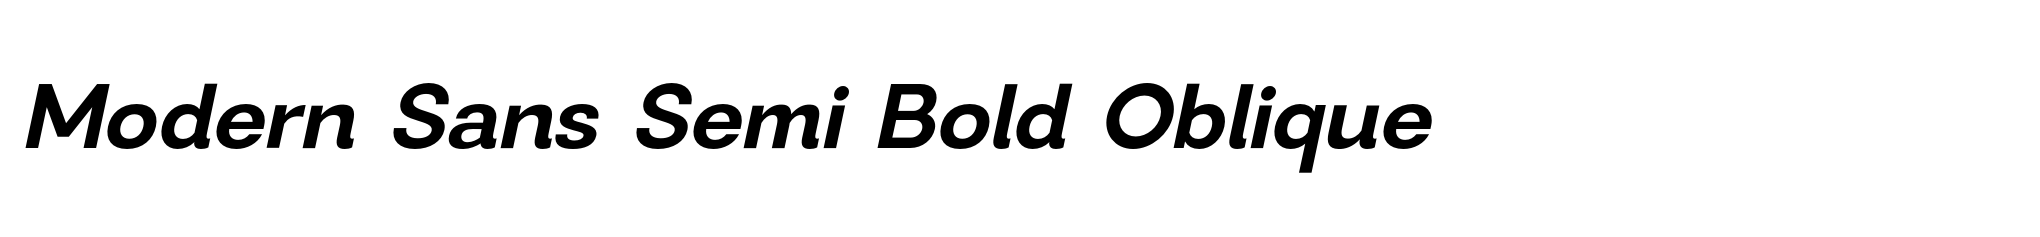 Modern Sans Semi Bold Oblique image